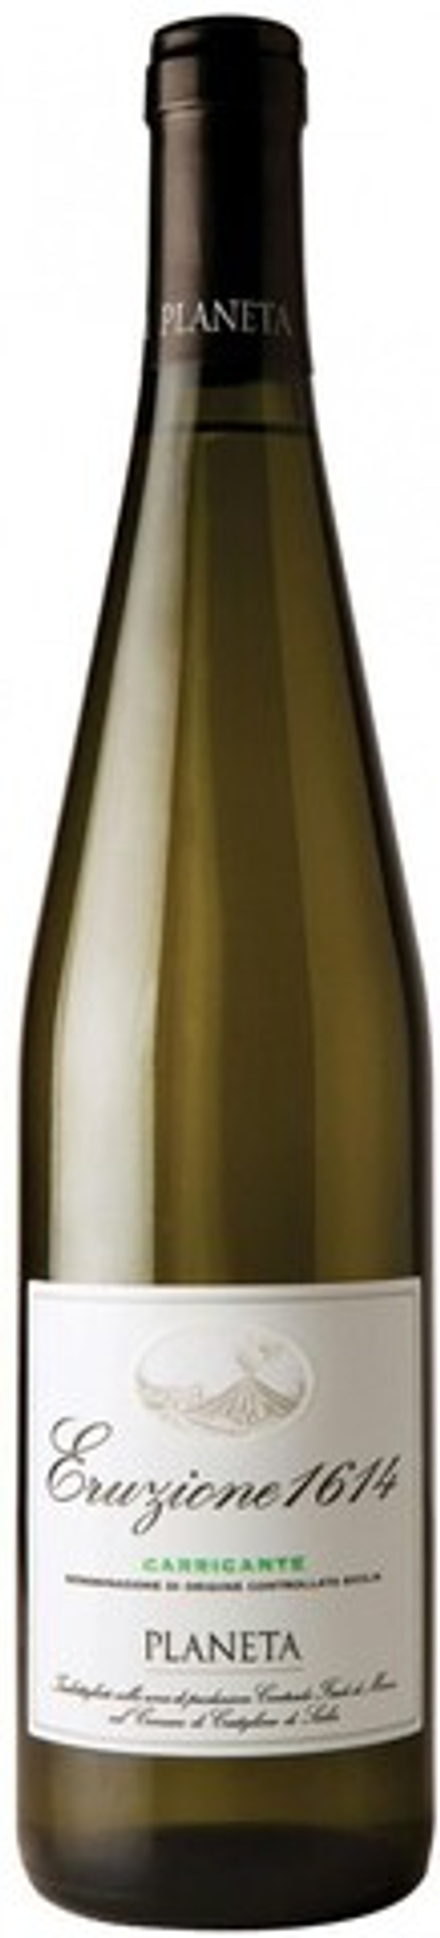 Вино Planeta Eruzione 1614 Carricante, 0,75 л.